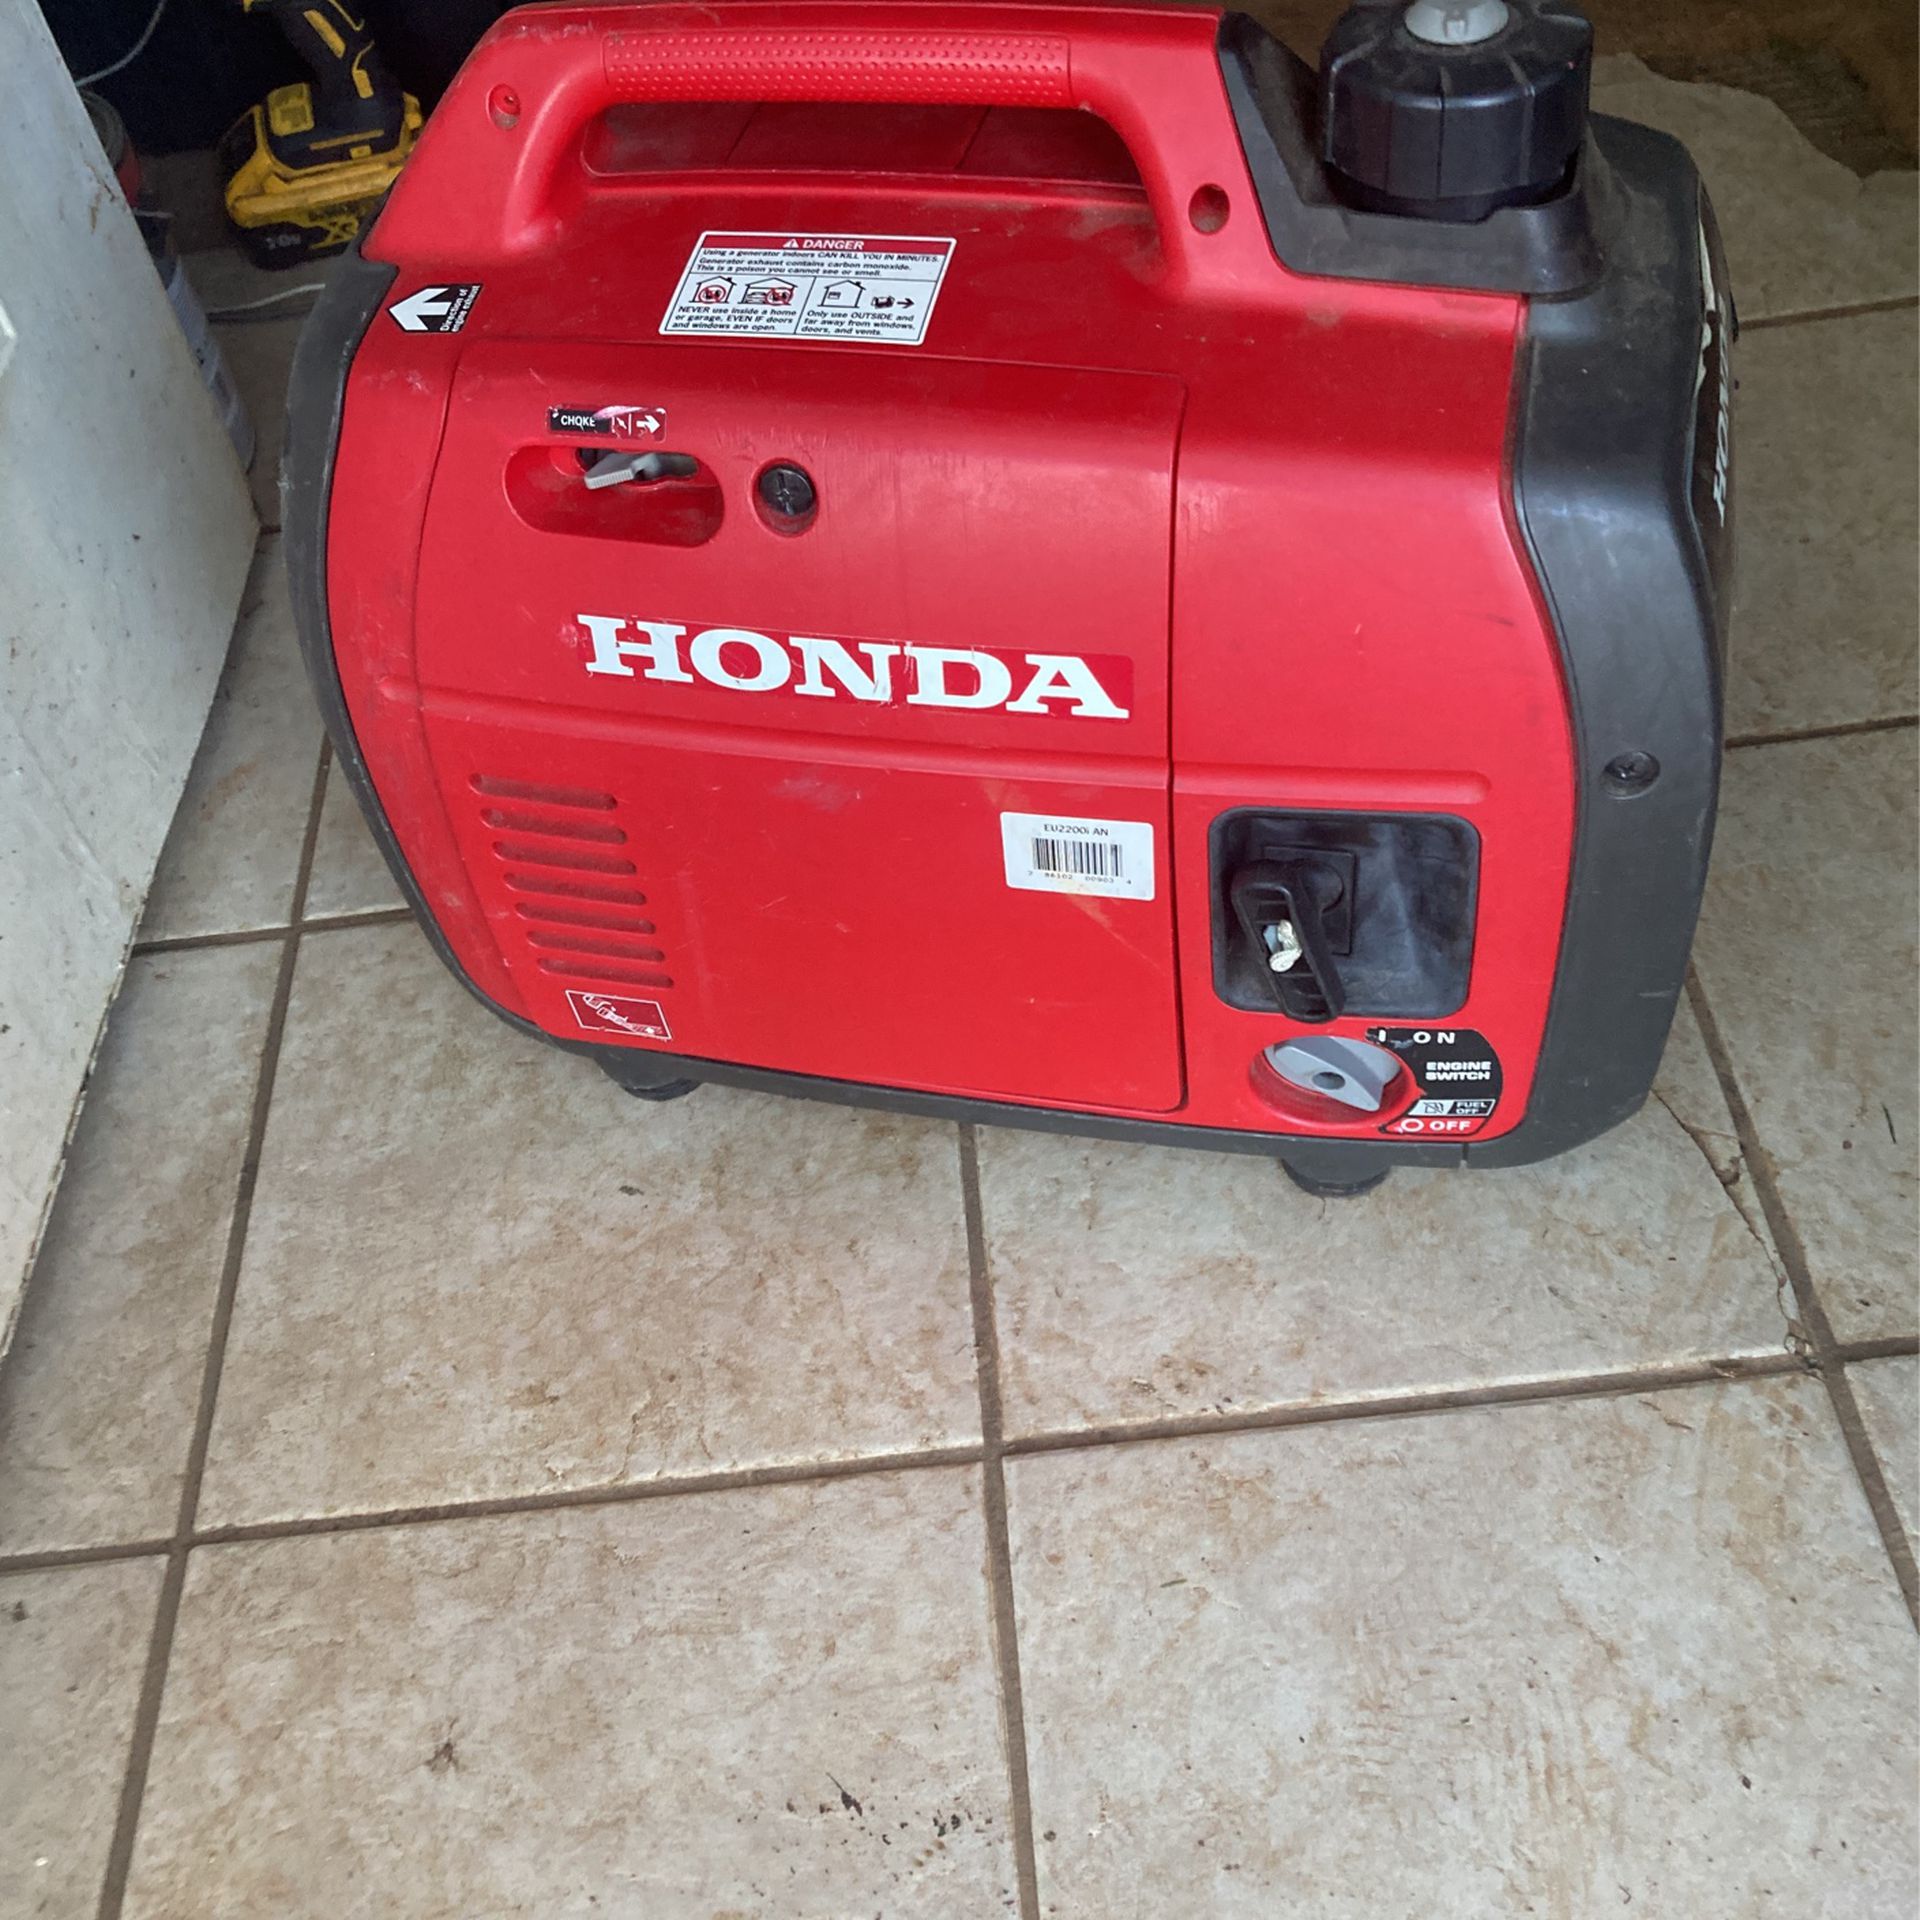 Honda 2200i Generator